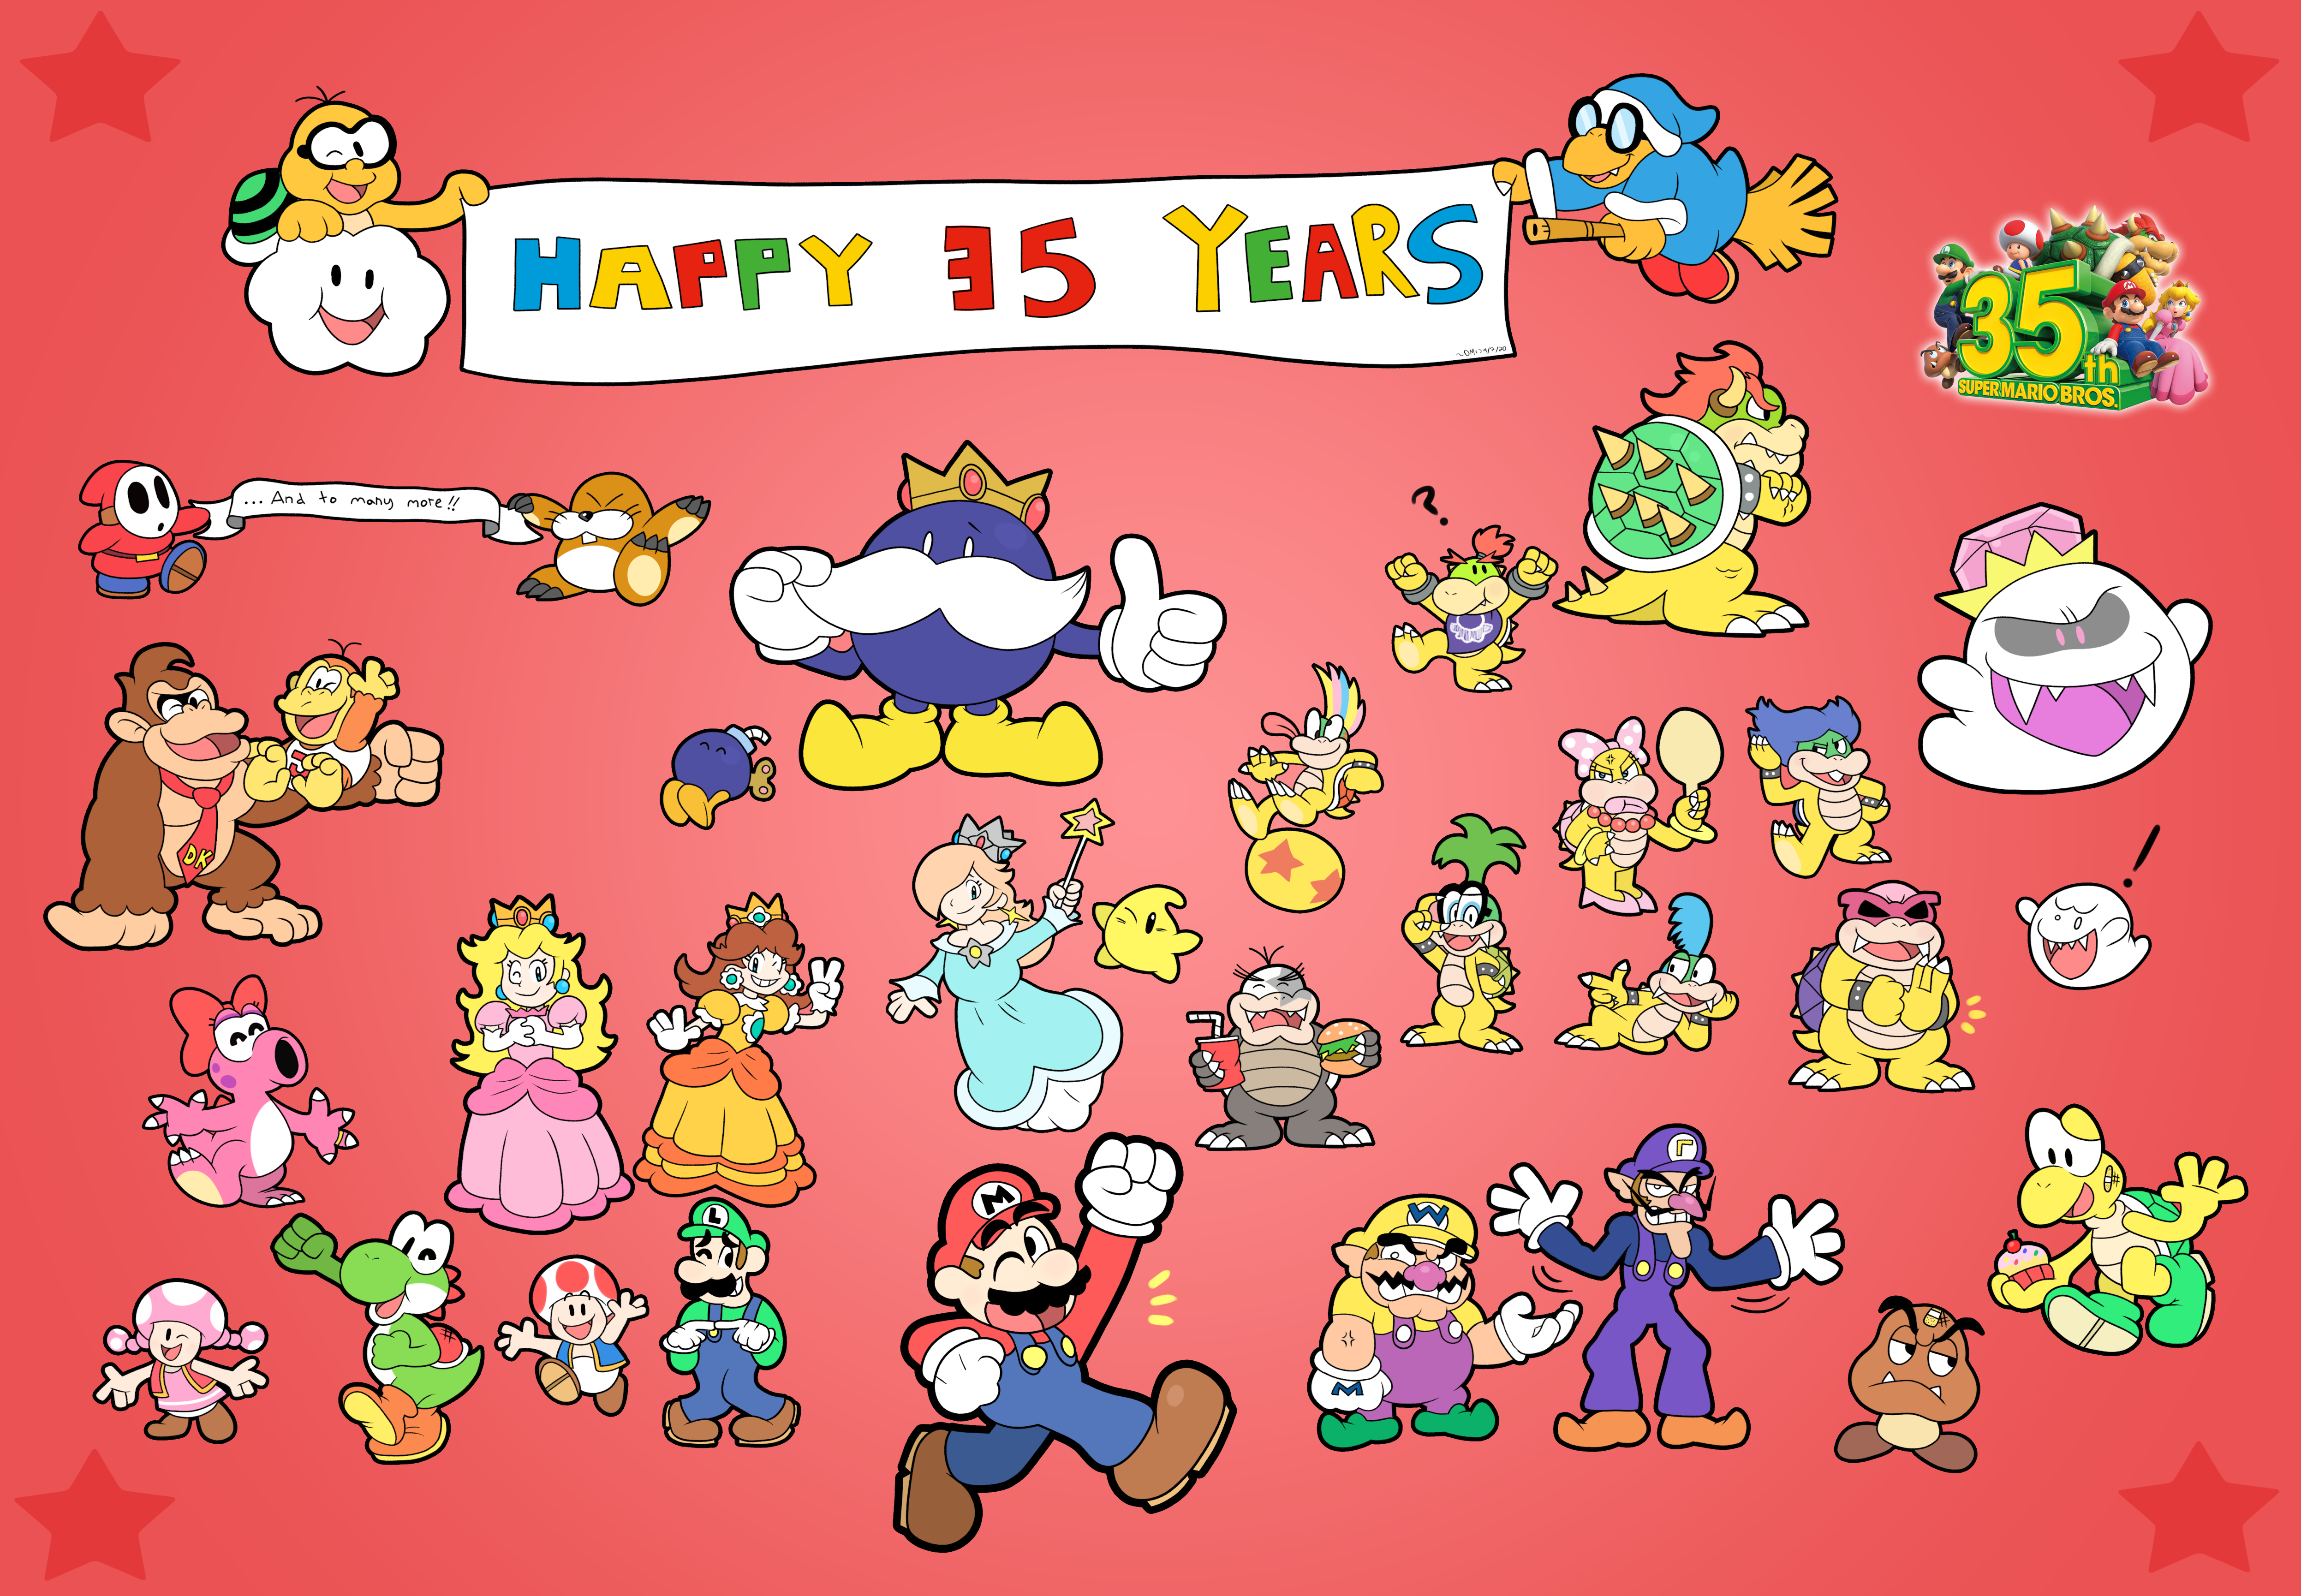 Goodbye Mario 35, Hello Pac-Man 99 by SoshiTheYoshi on DeviantArt